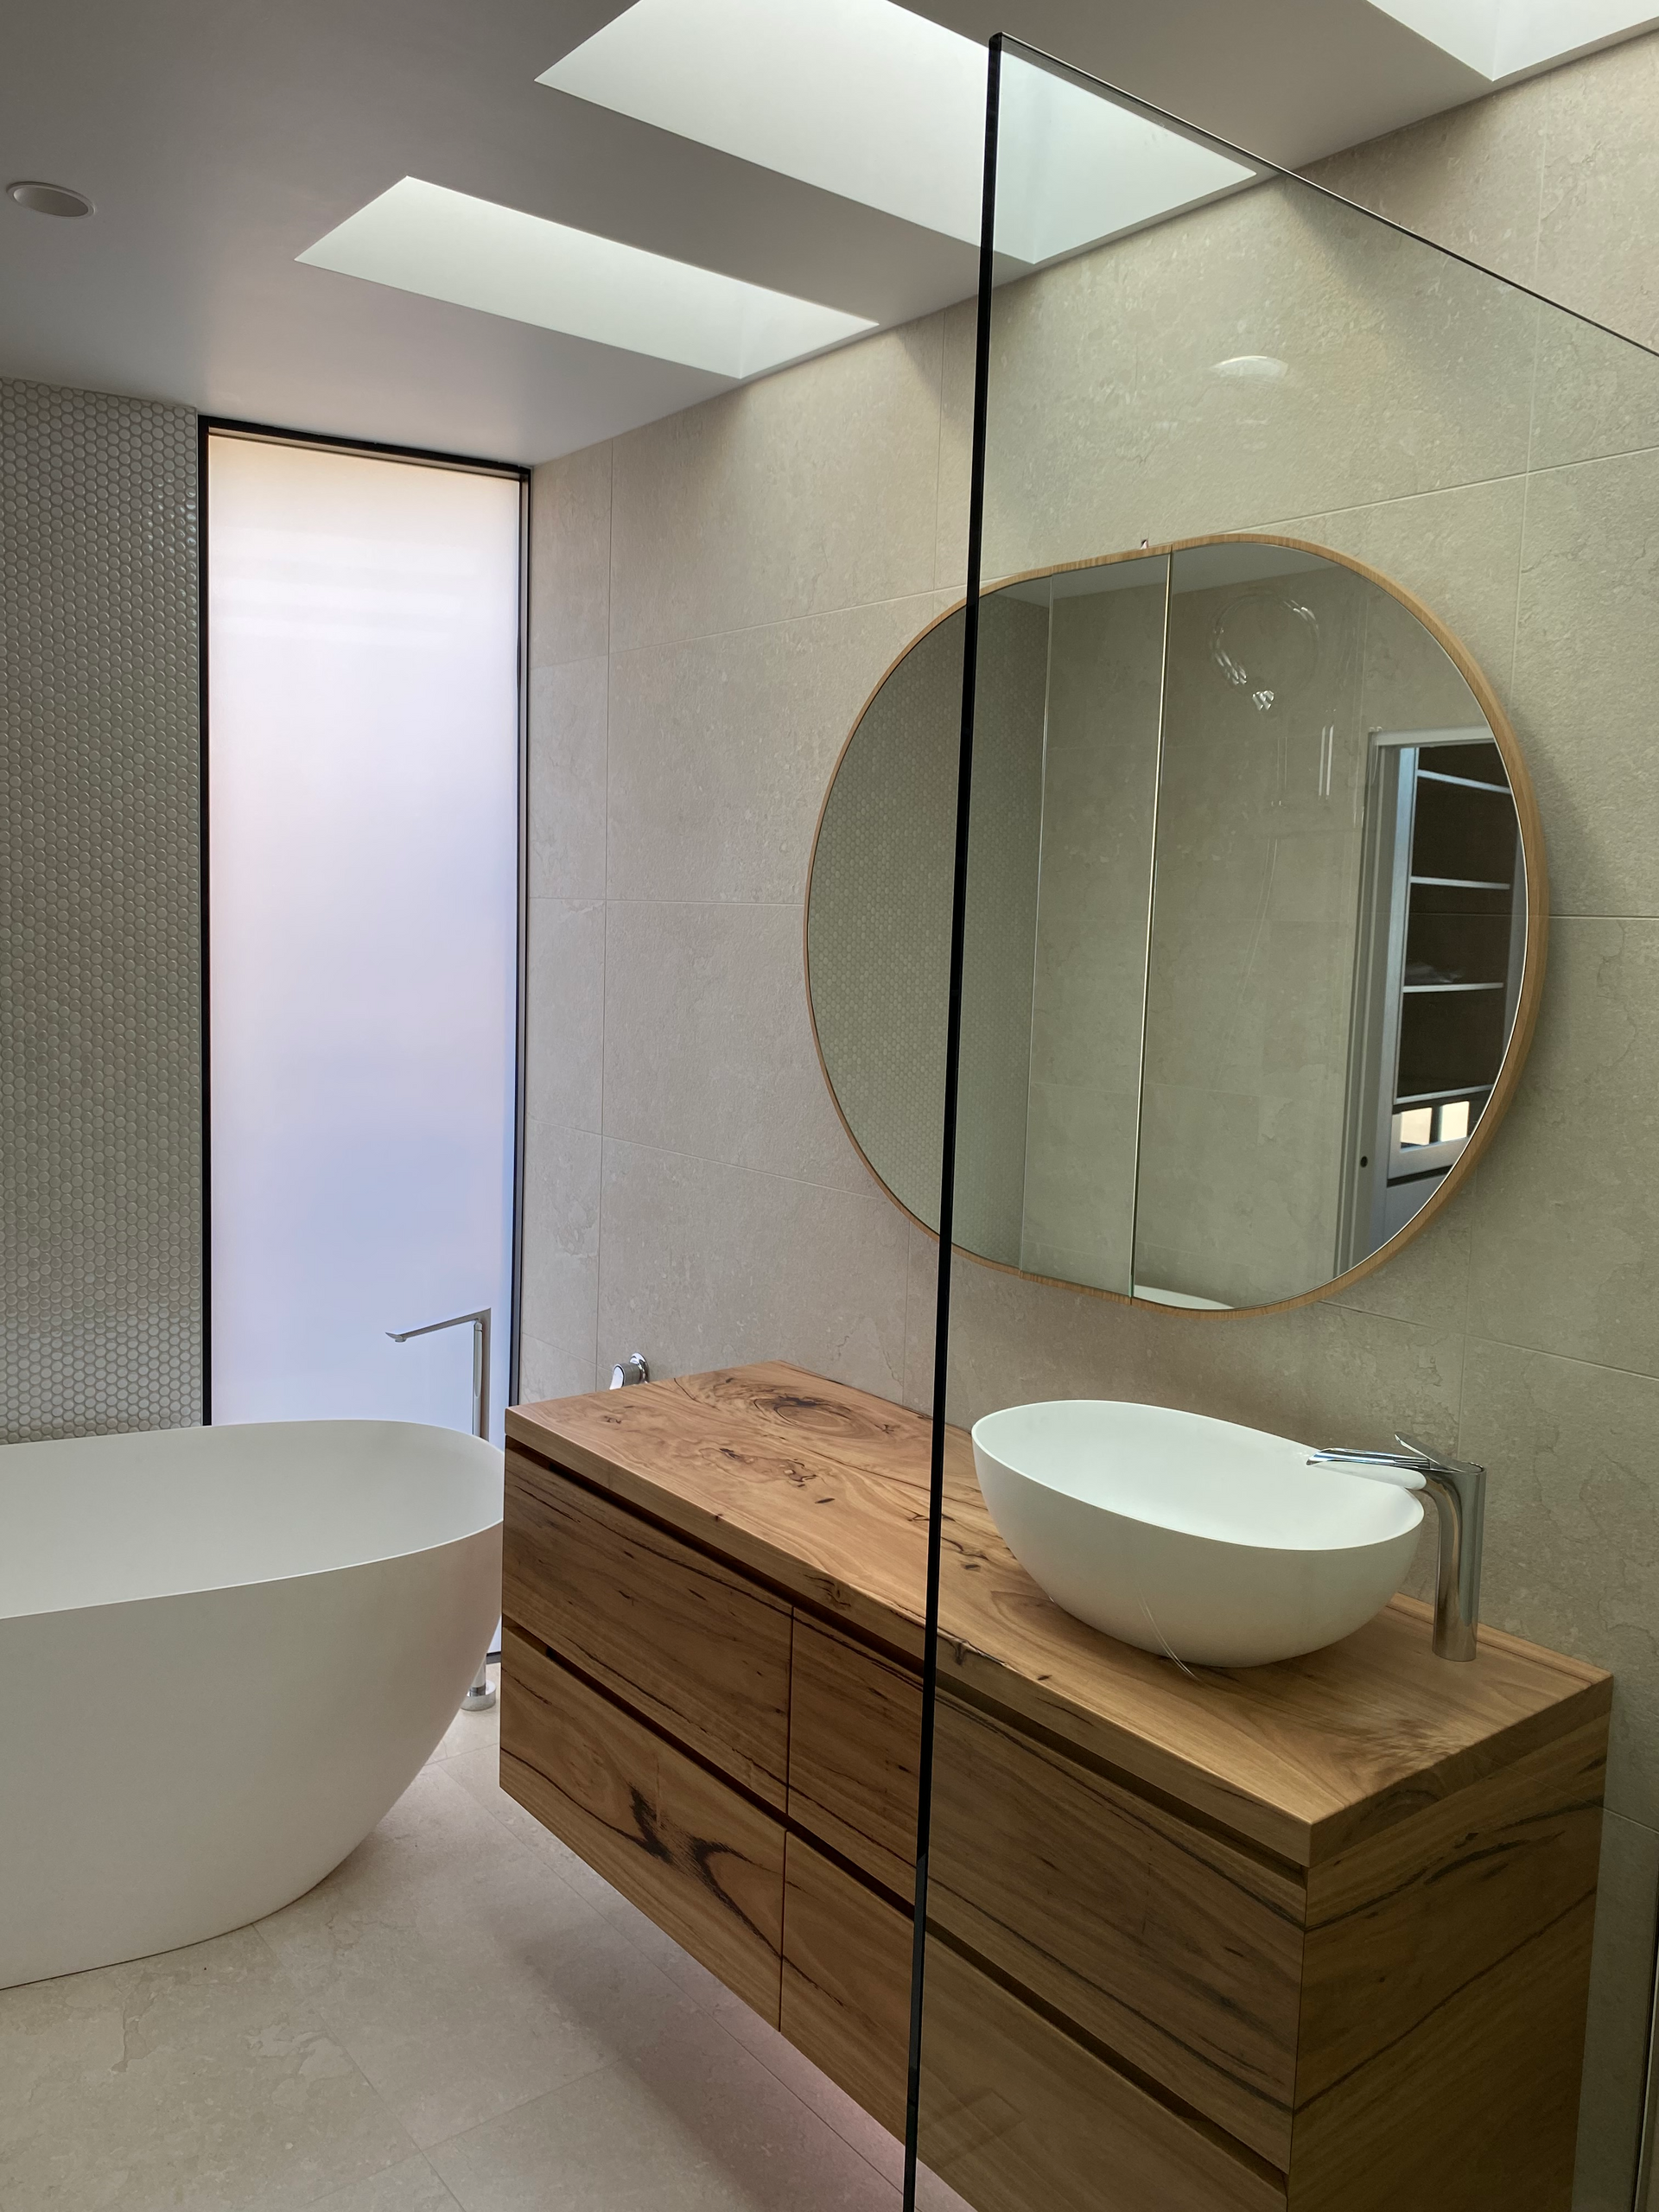 Elegant Bathroom - Renovation Specialist in Forster, NSW